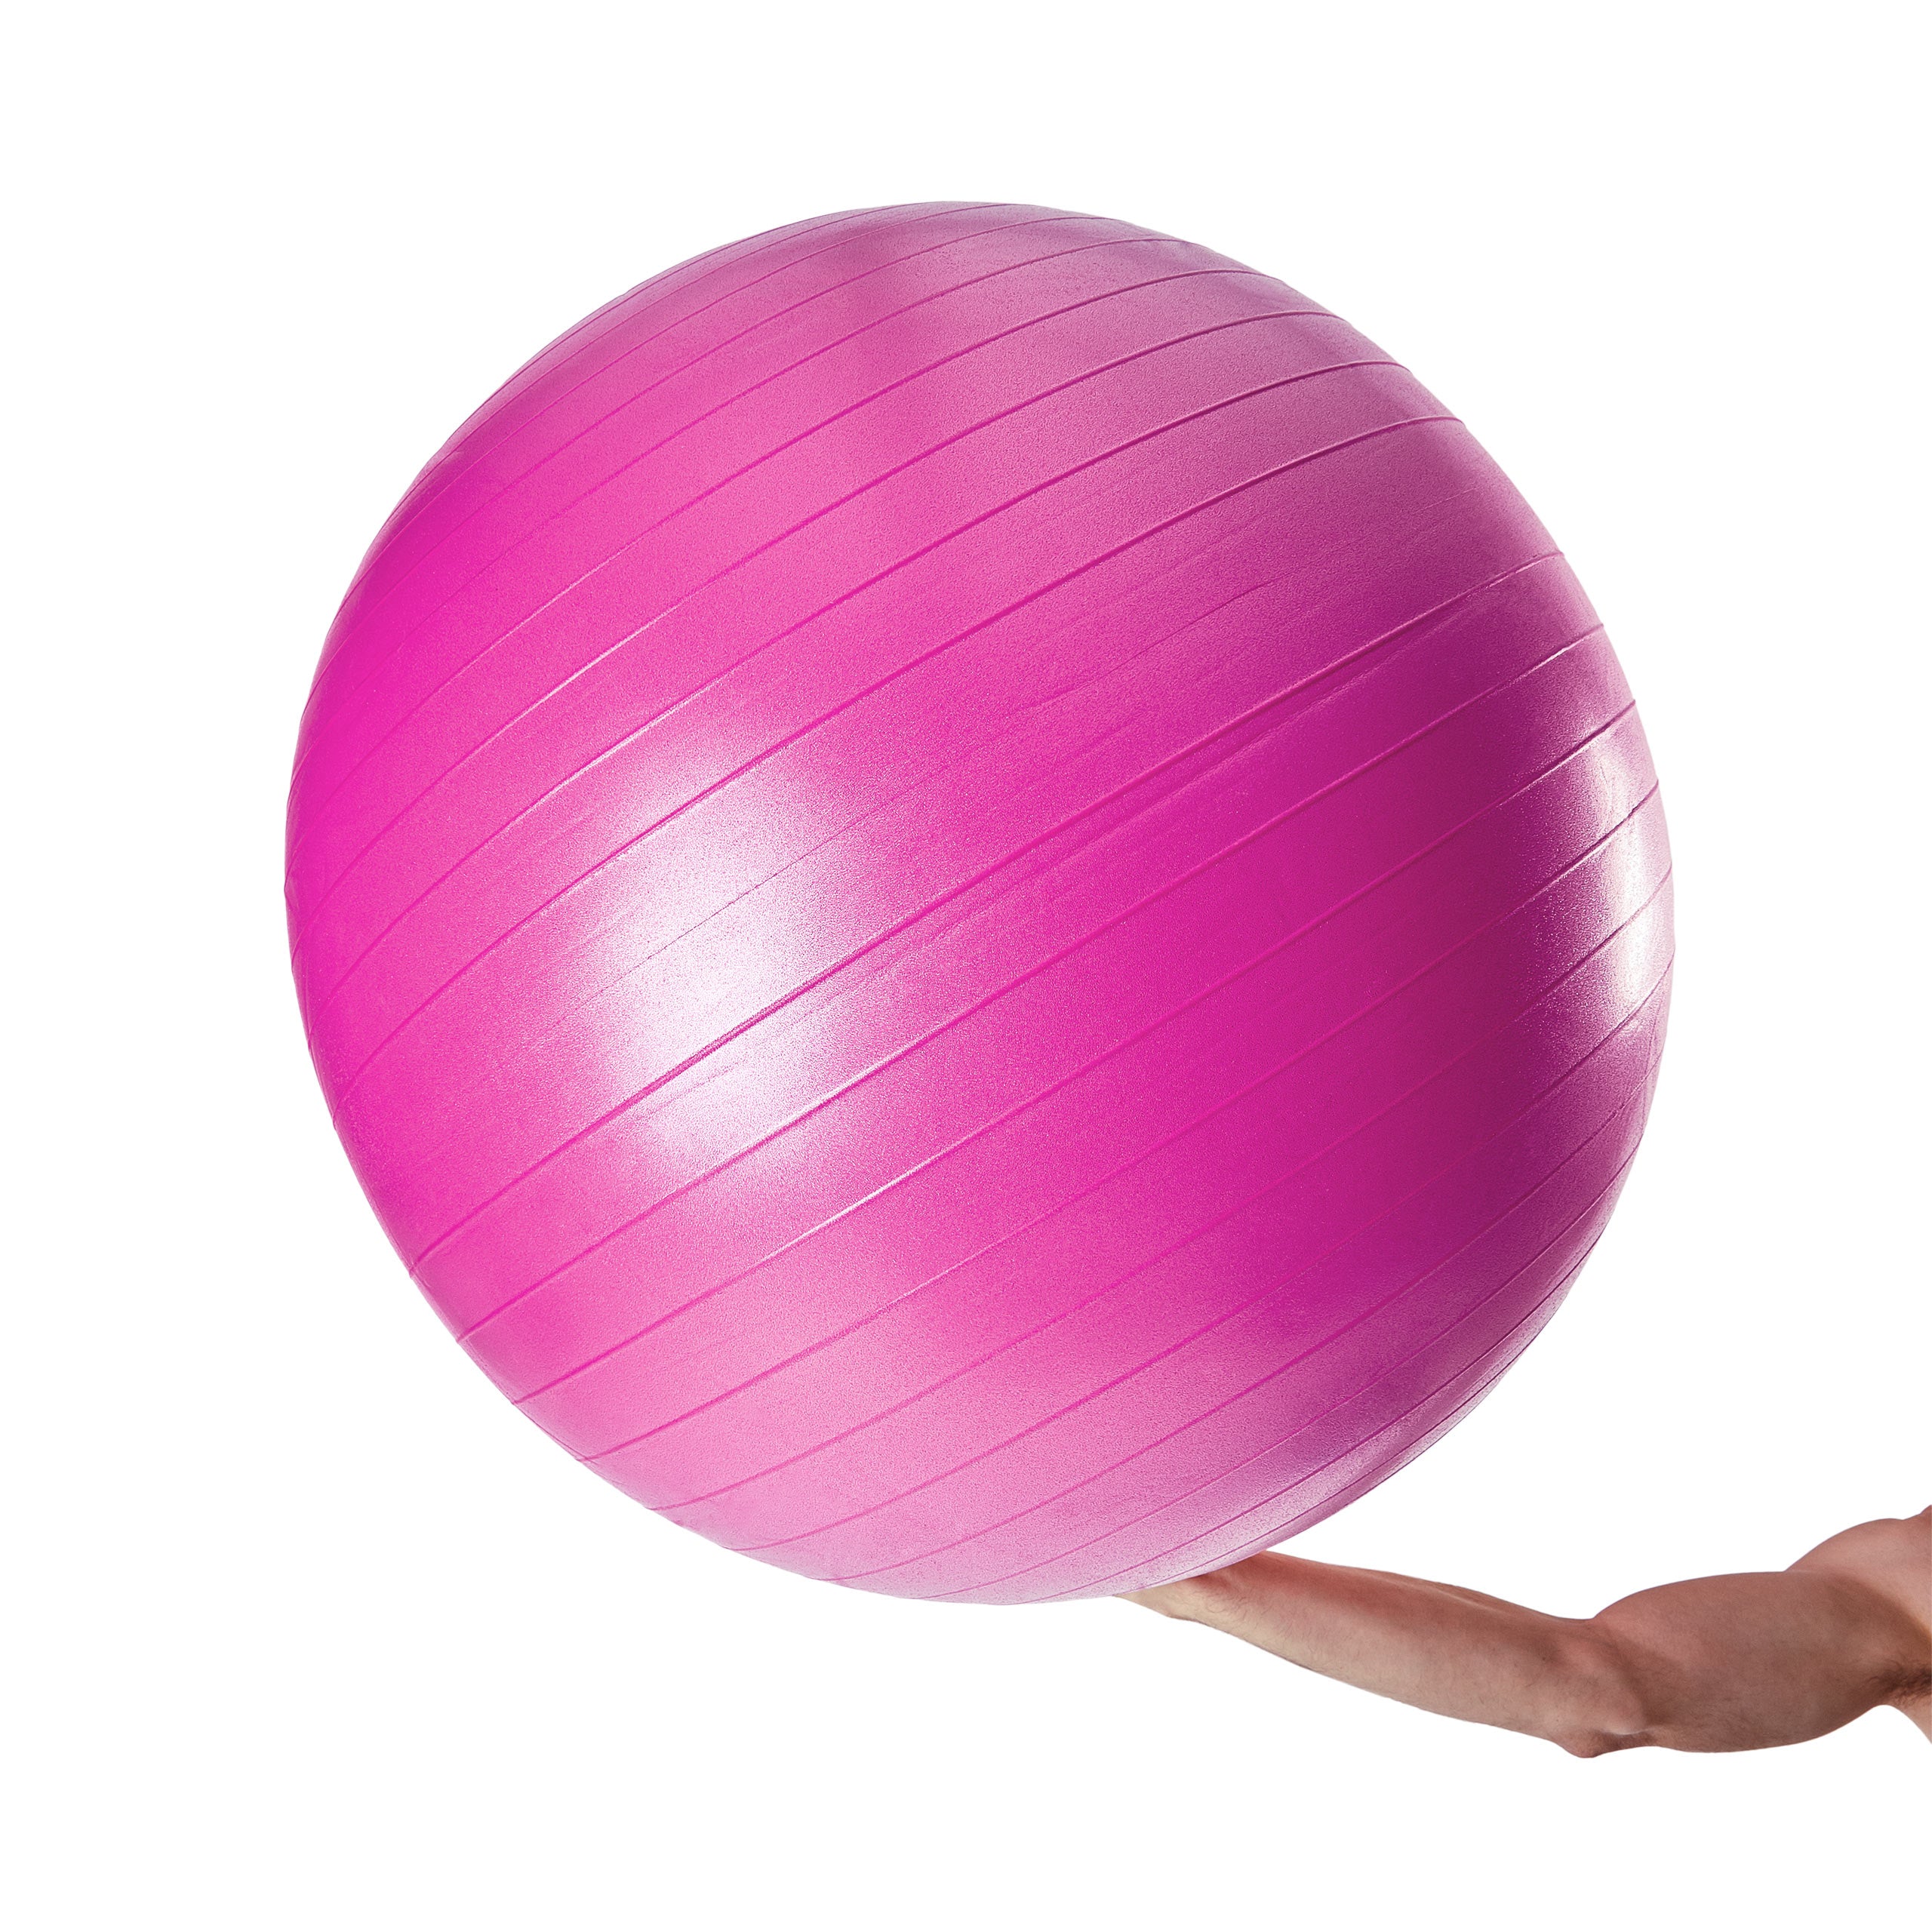 Gymnastikball inkl. Ballpumpe - Fitness Sitzball - Pink - 75 cm